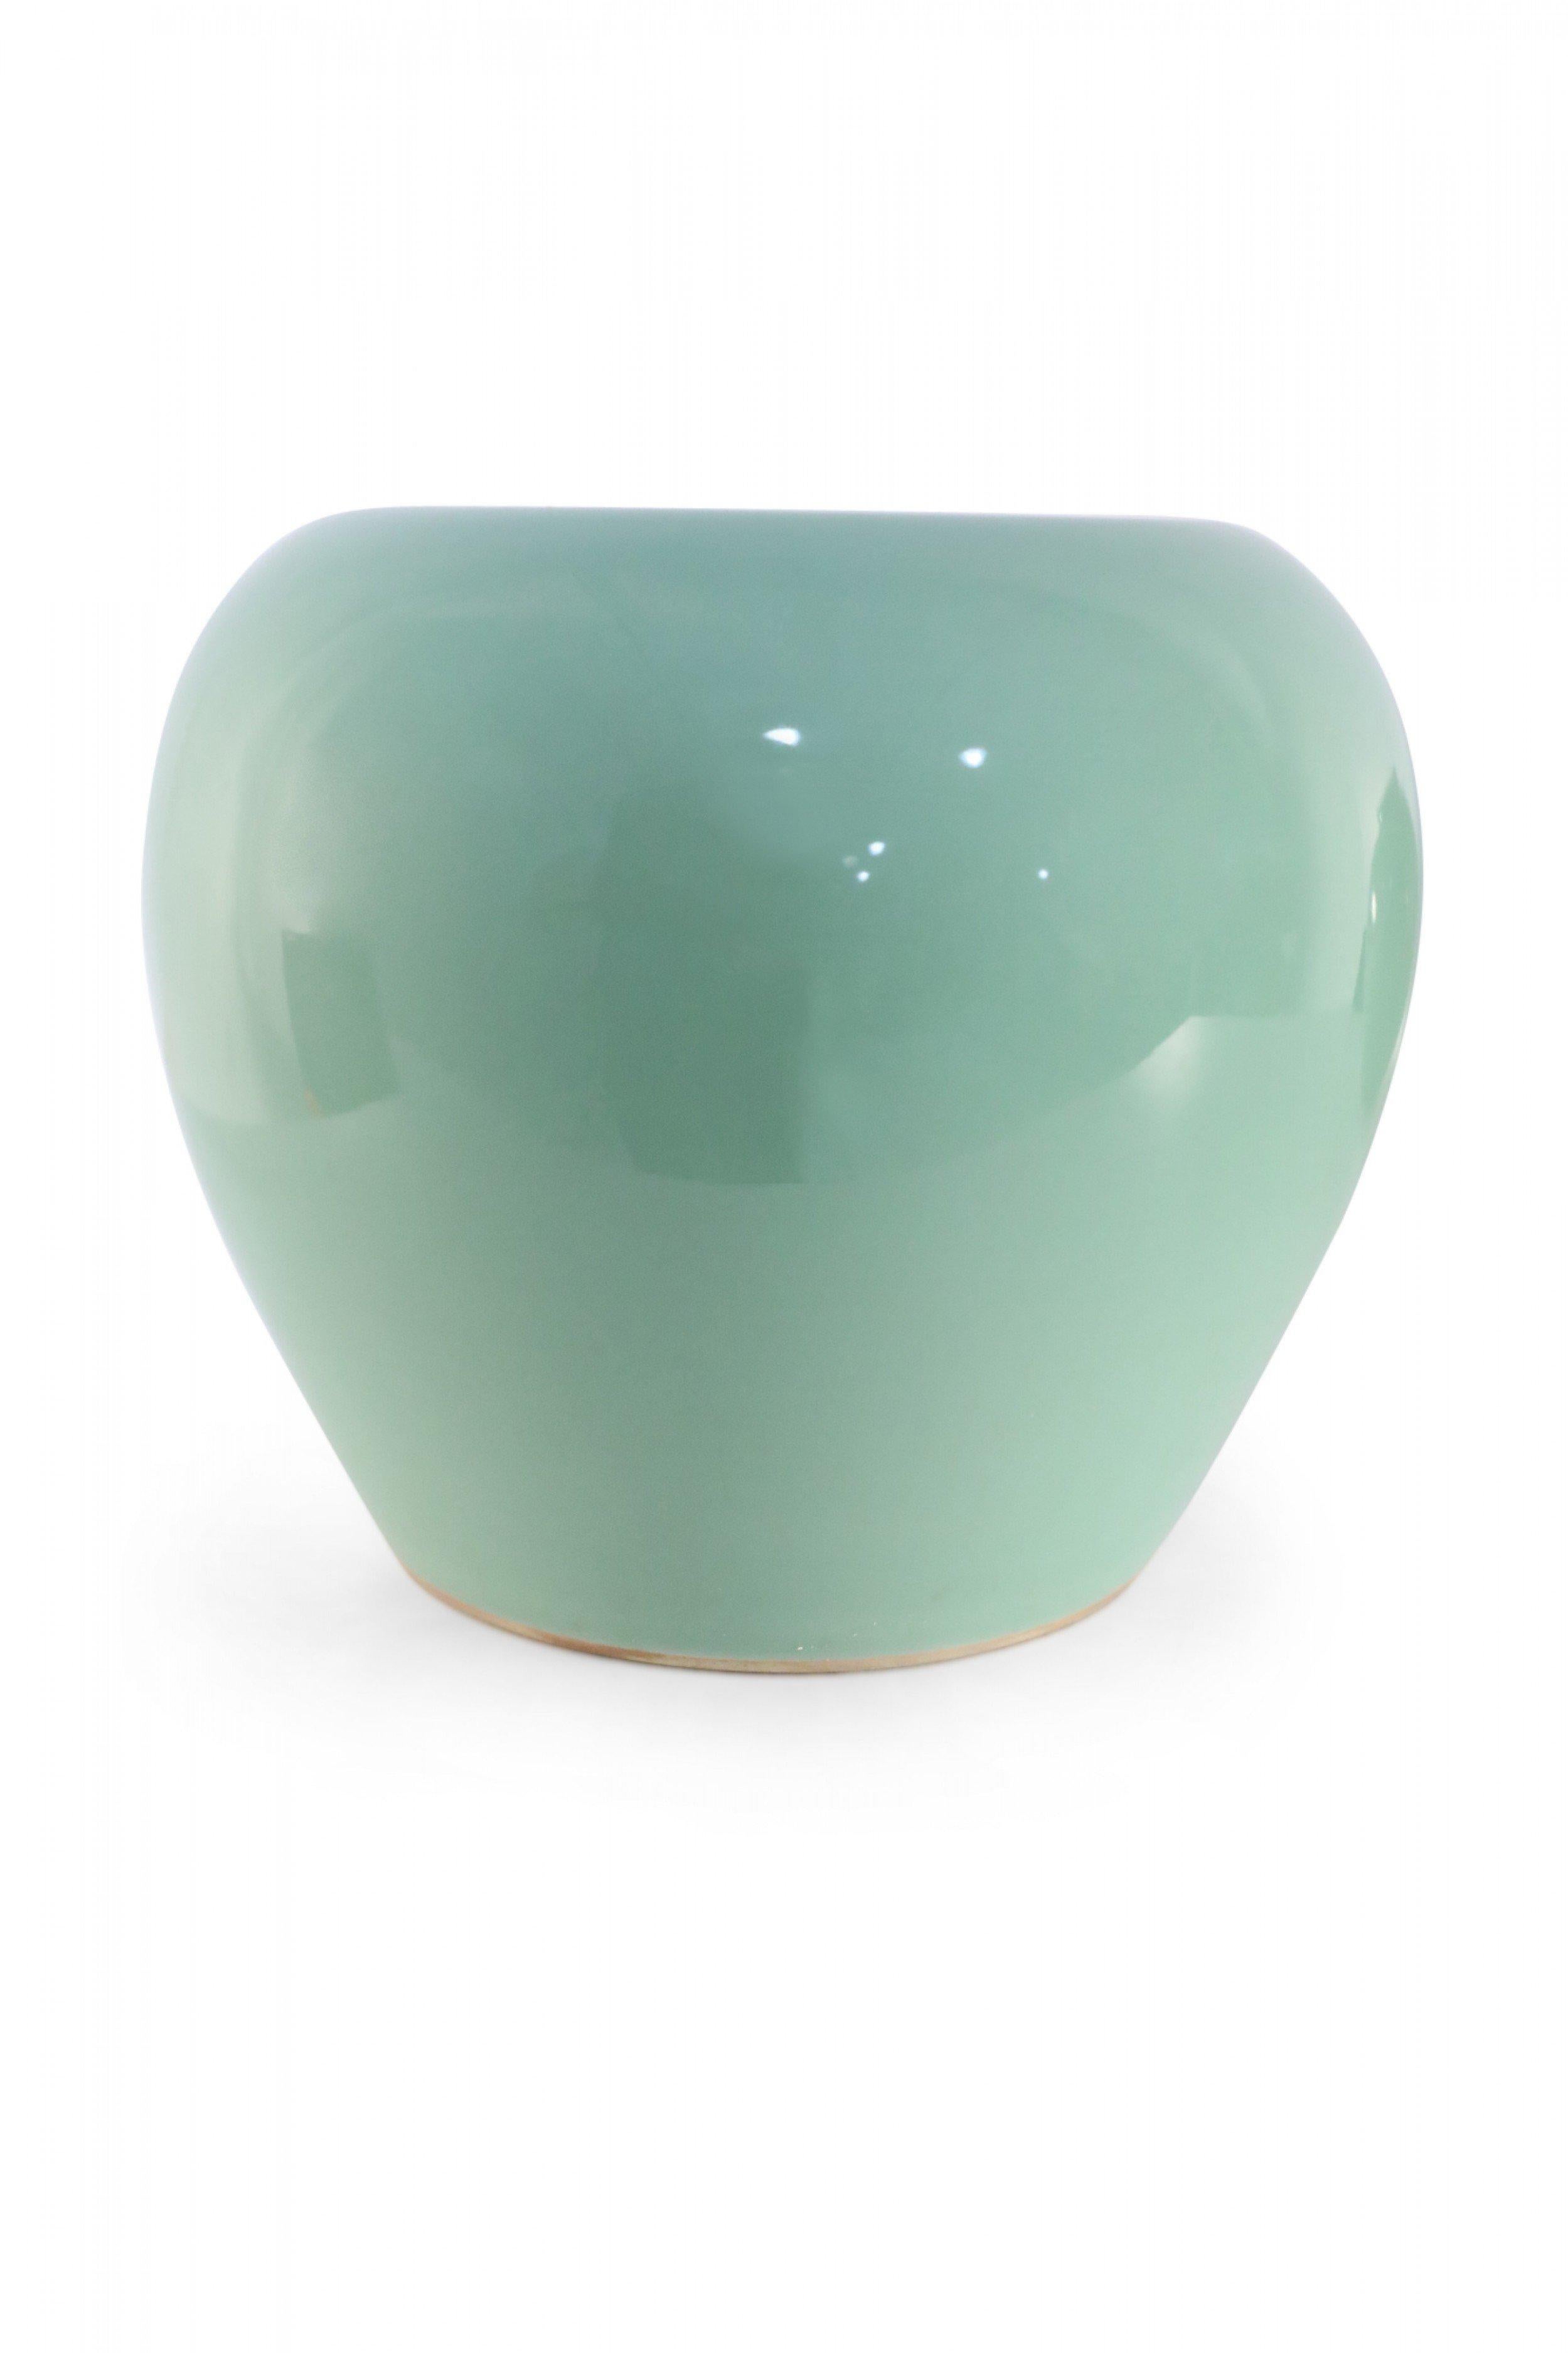 19th Century Chinese Celadon Glazed Porcelain Pot For Sale